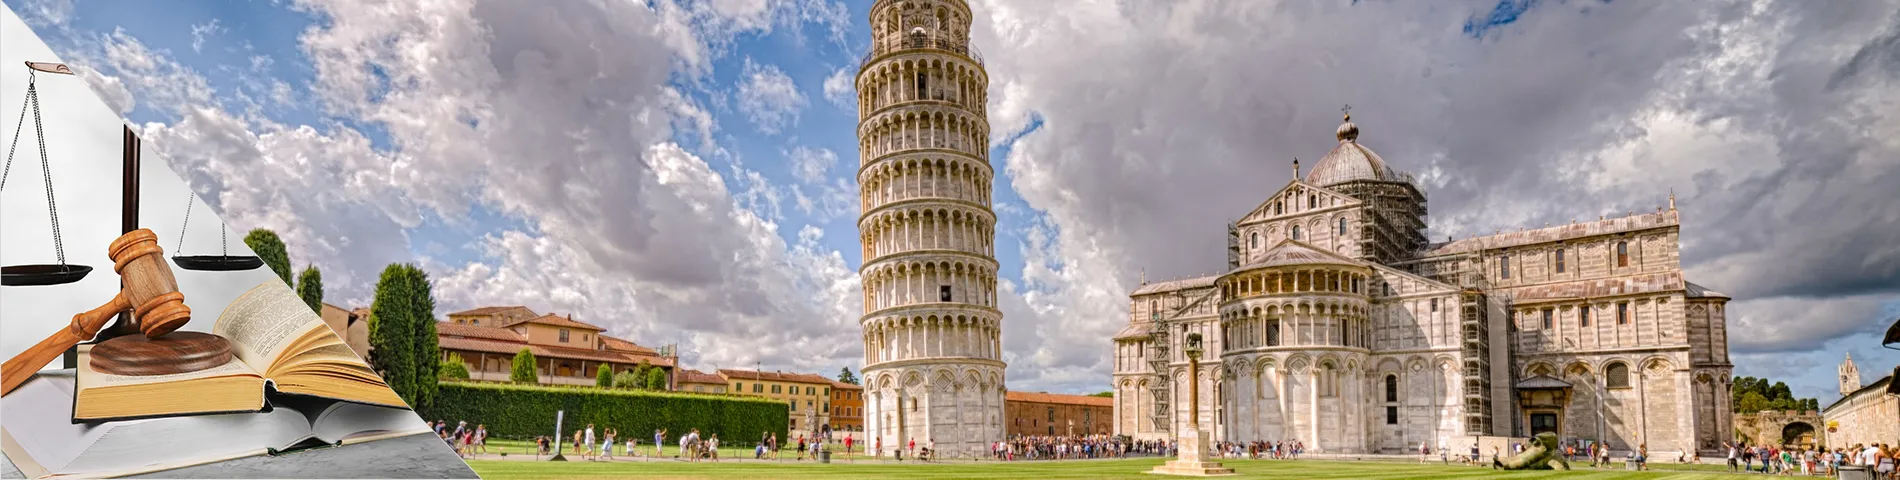 Pisa - Italian for Lawyers